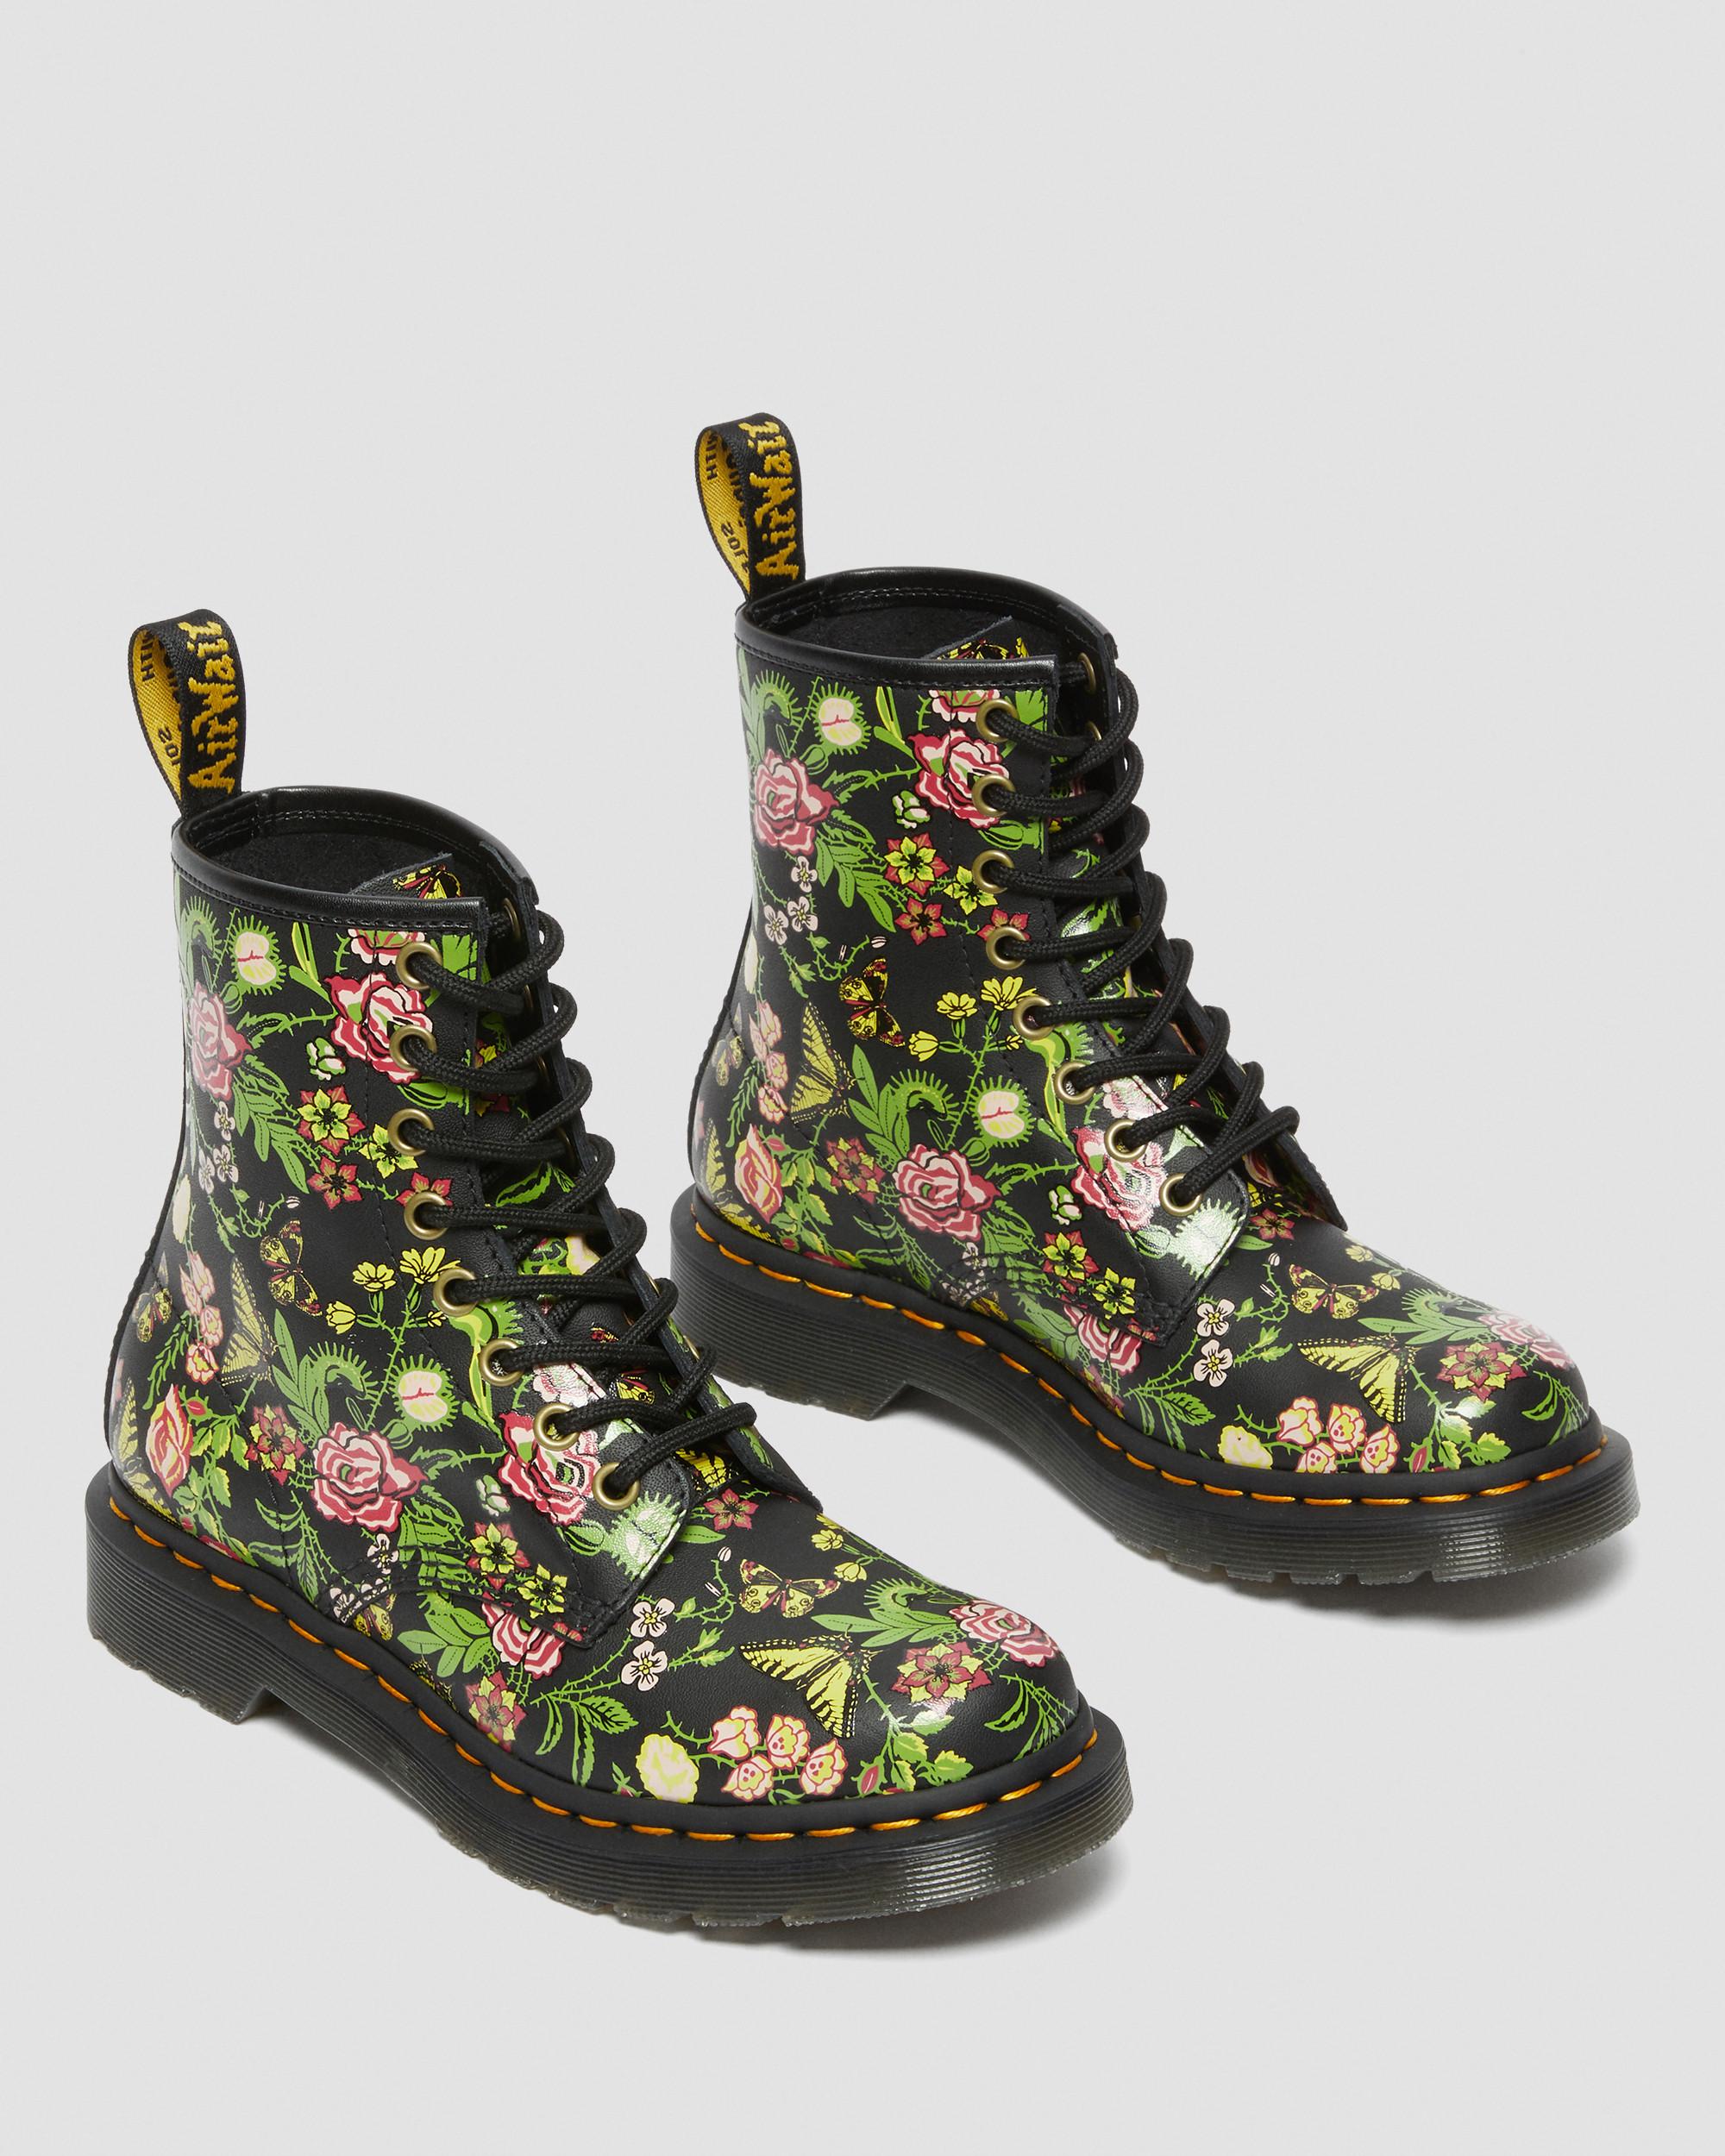 Miles Groenland romantisch 1460 Women's Floral Bloom Lace Up Boots | Dr. Martens